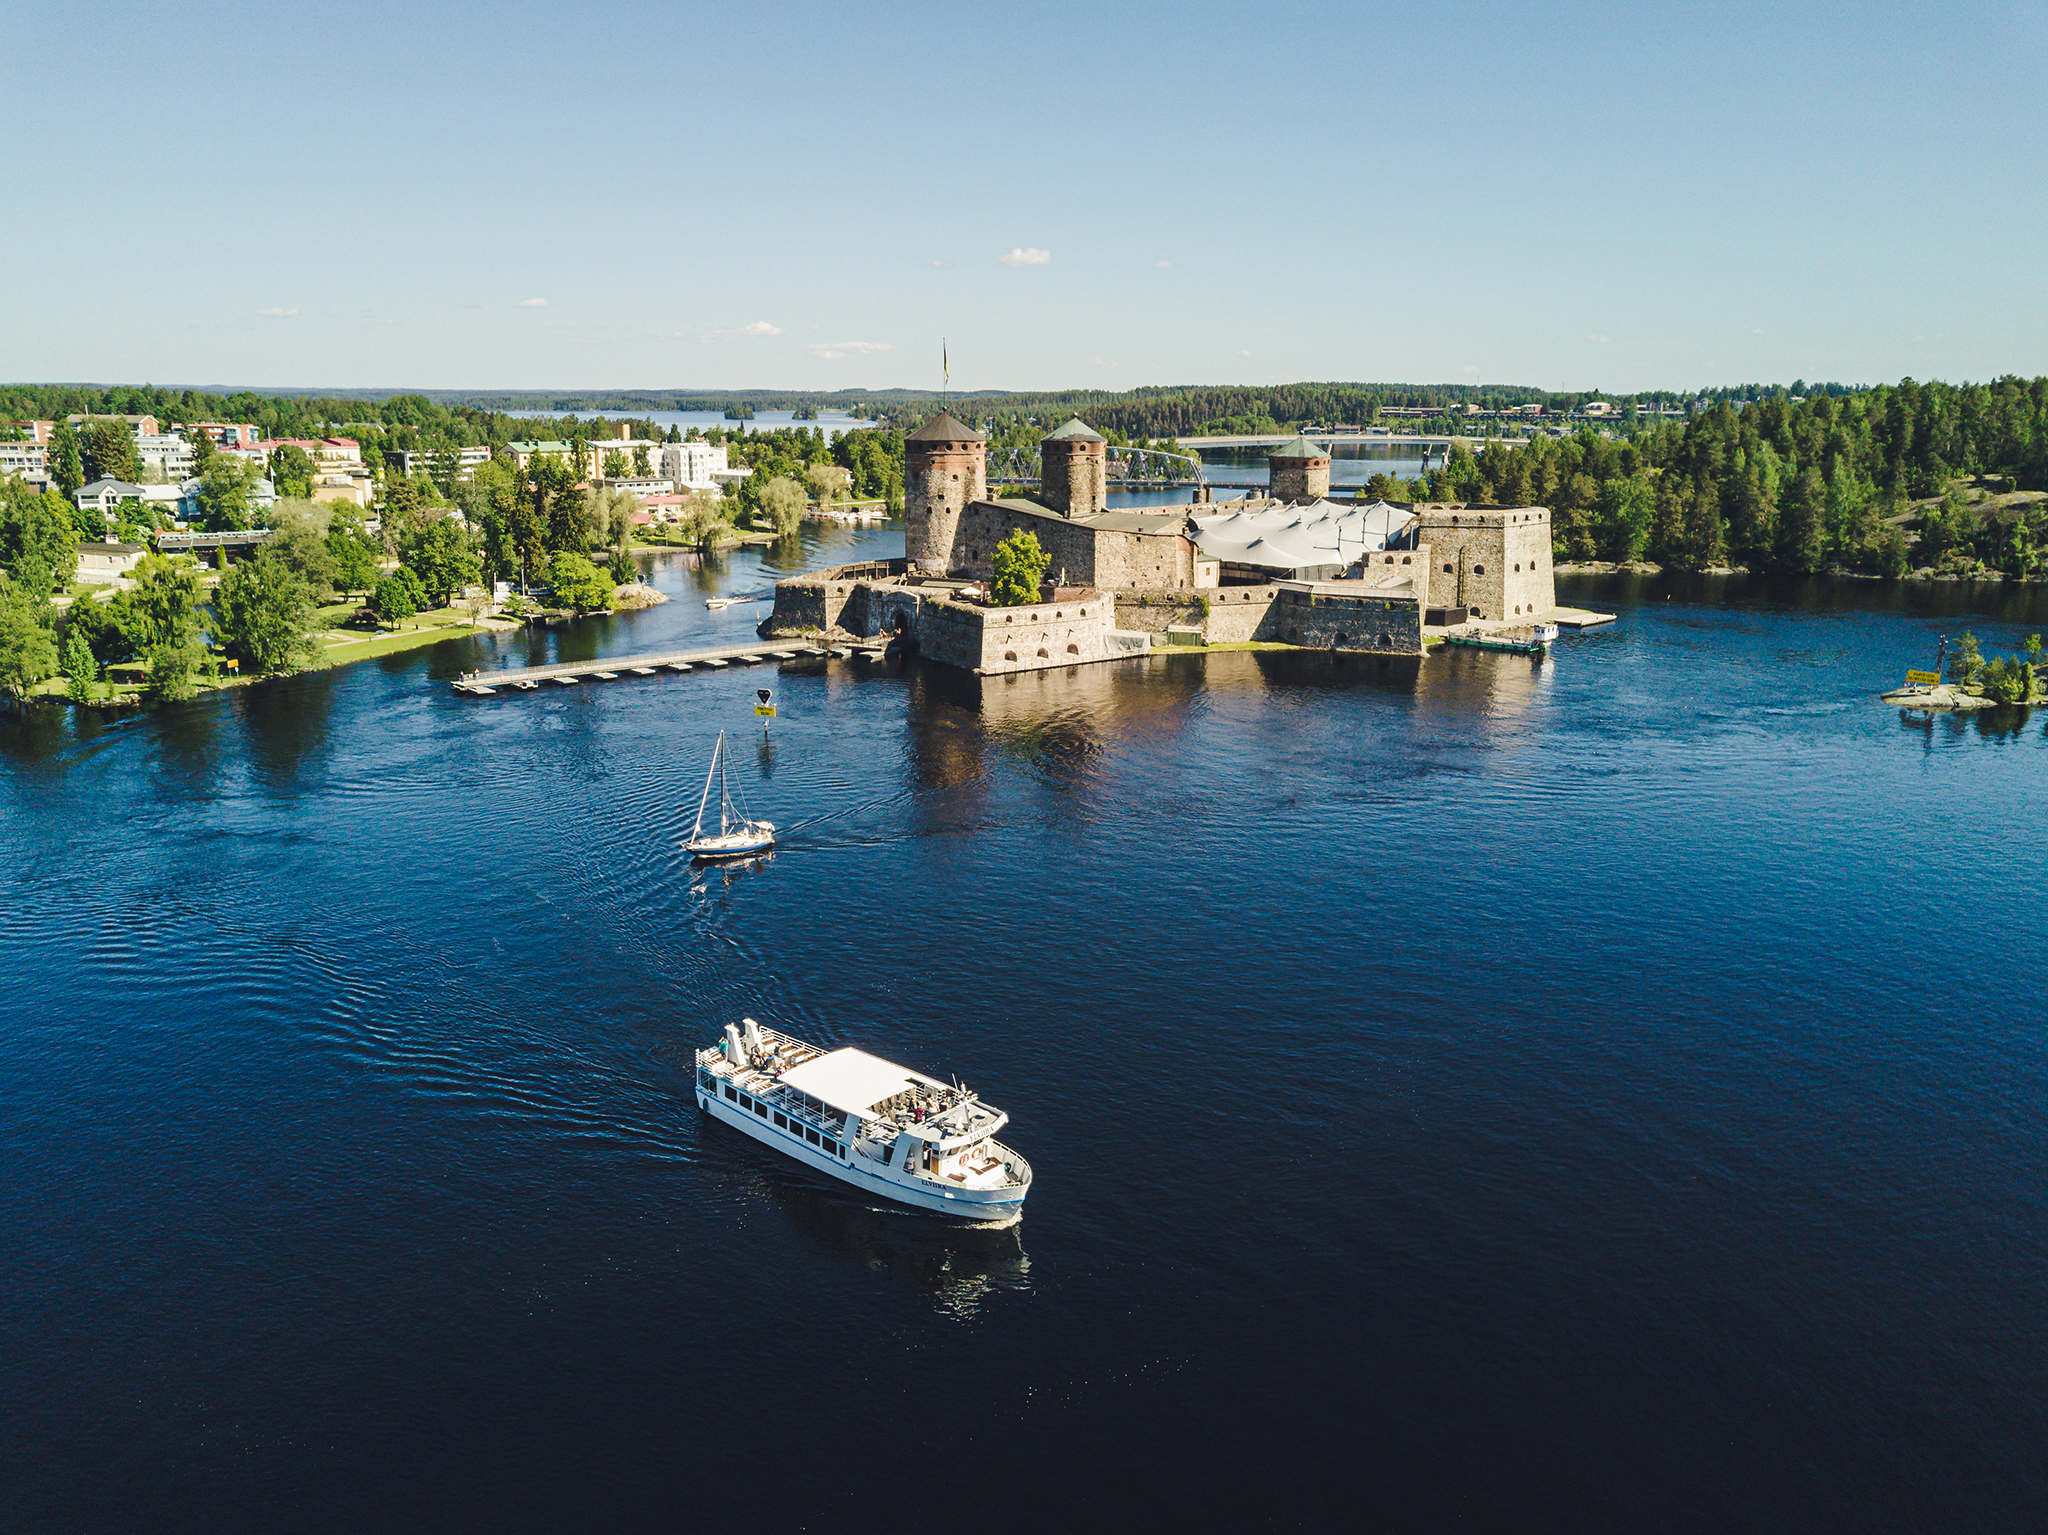 Olavinlinna castle and Savonlinna lake cruise travel to Saimaa archipelago with m/s Elviira